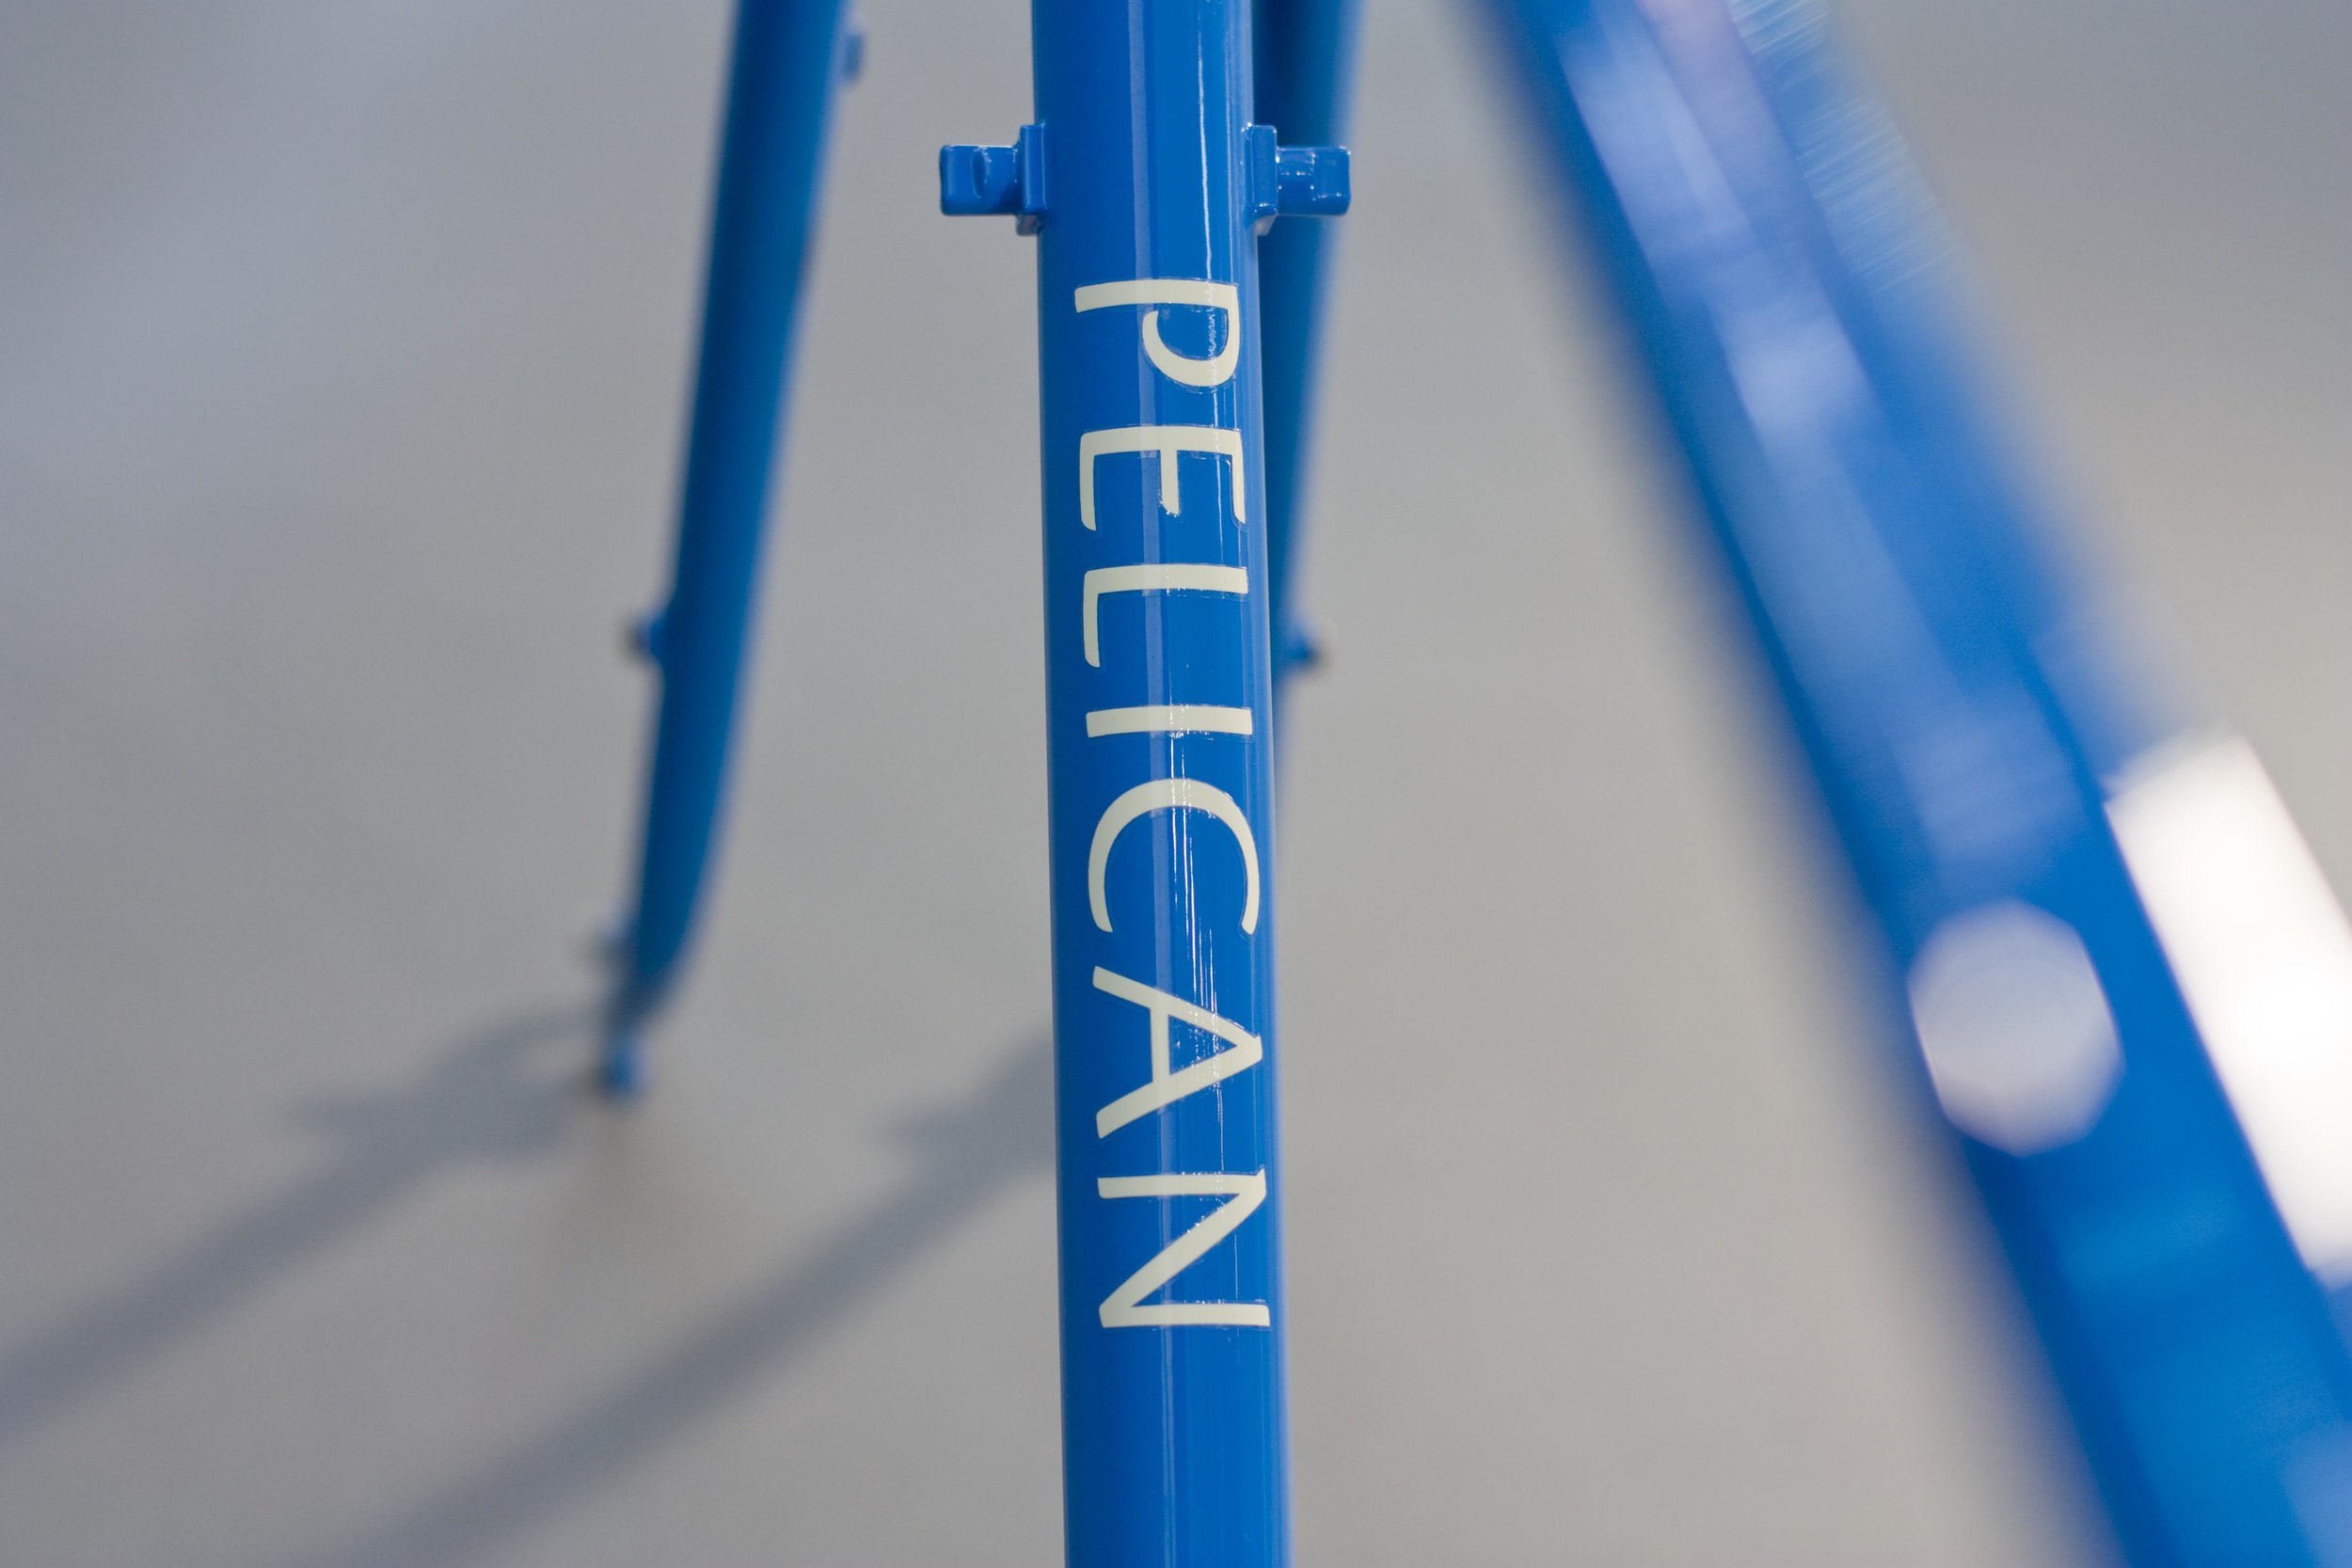 56cm-winter-bicycles-built-pelican_8270944436_o.jpg